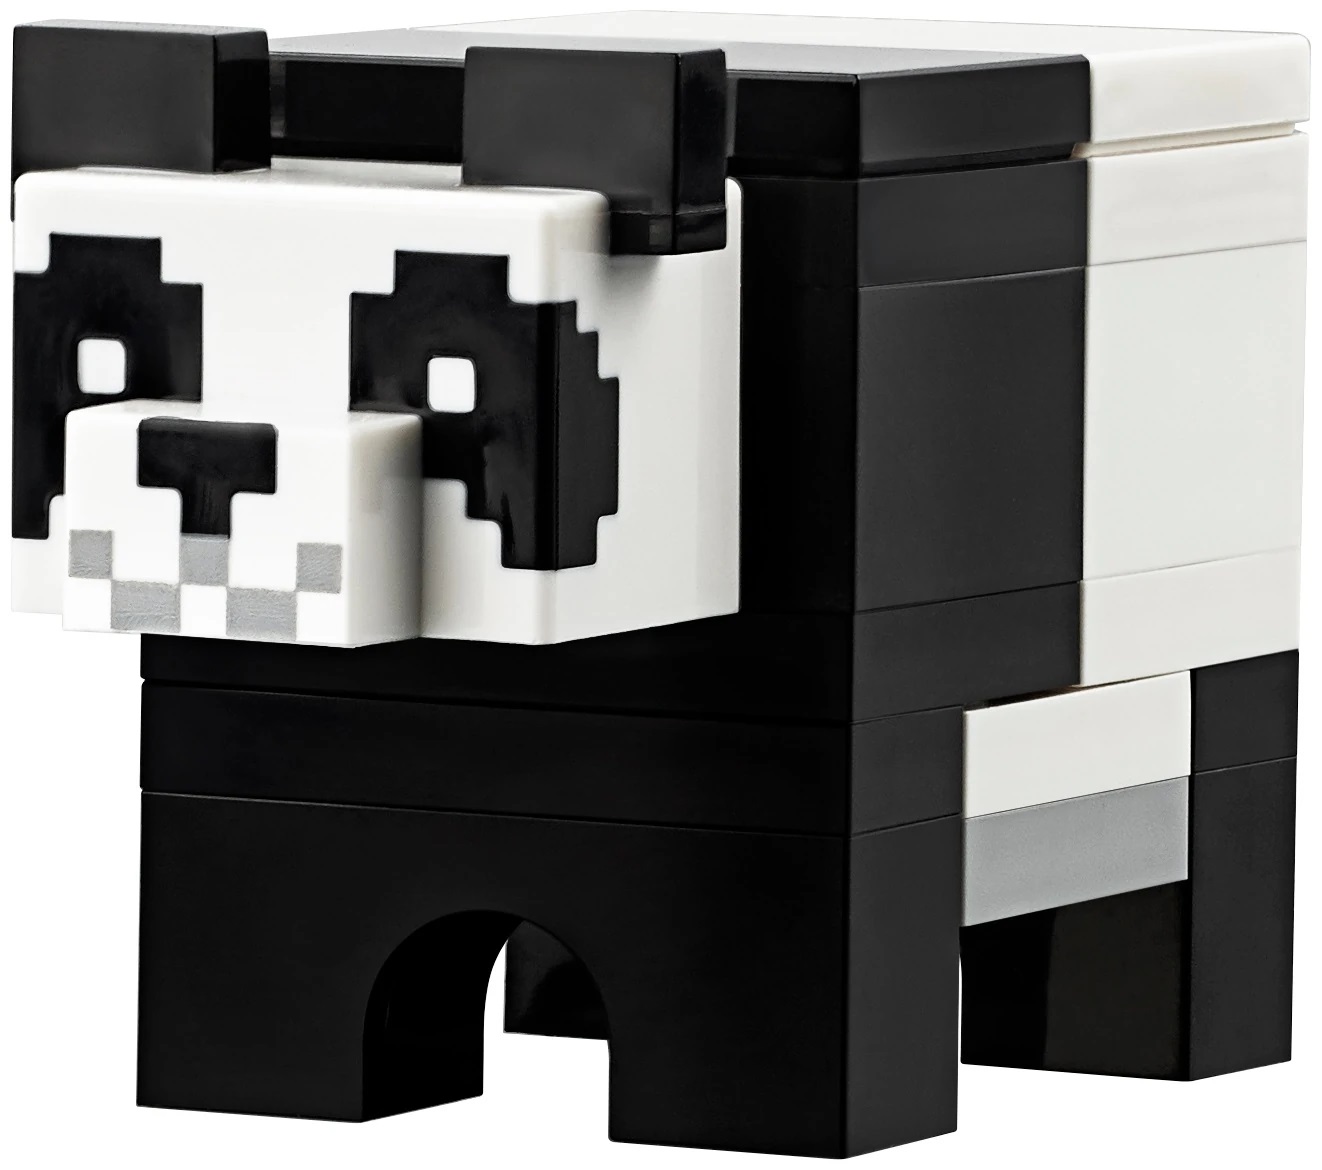 LEGO Baby Panda Brick-Built 21158 Minecraft Land Animal Minifigure